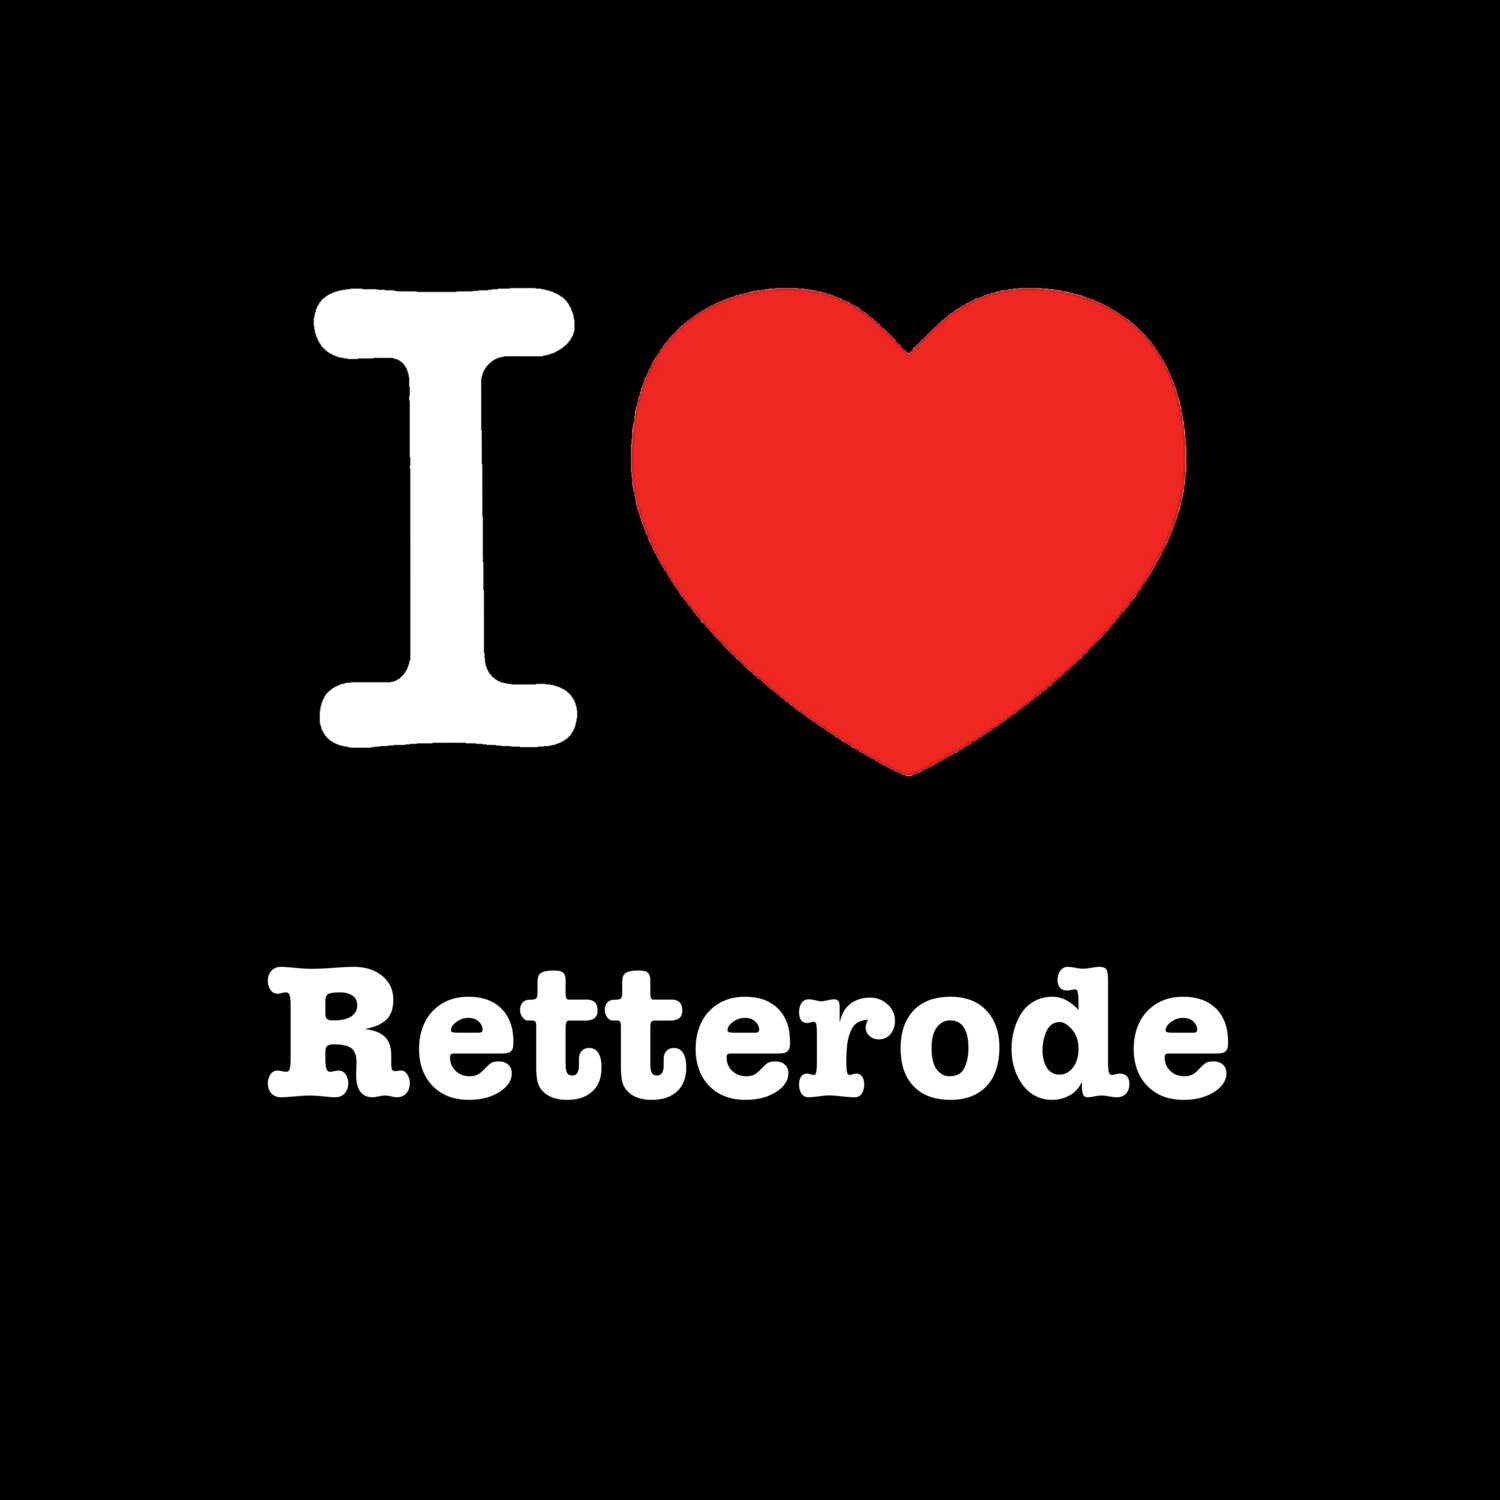 Retterode T-Shirt »I love«